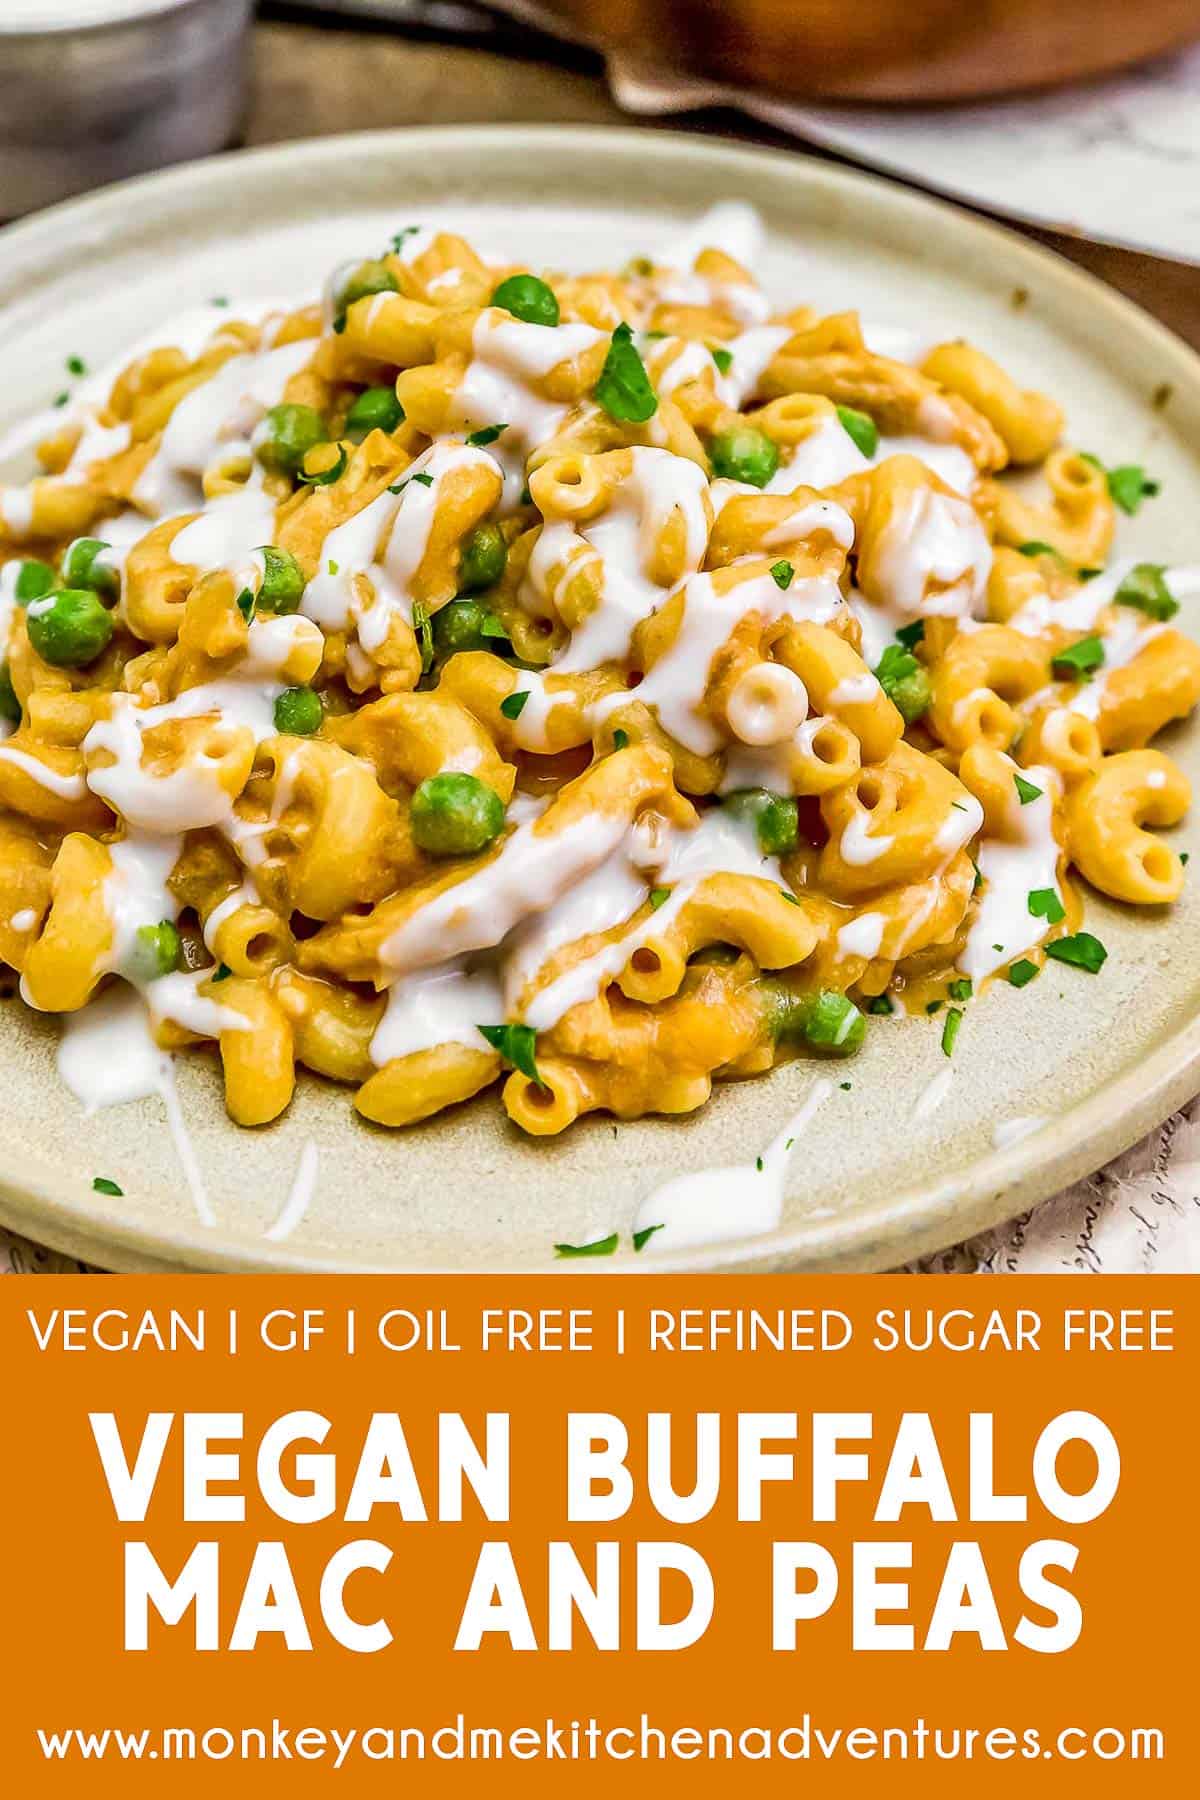 Vegan Buffalo Mac and Peas with text description